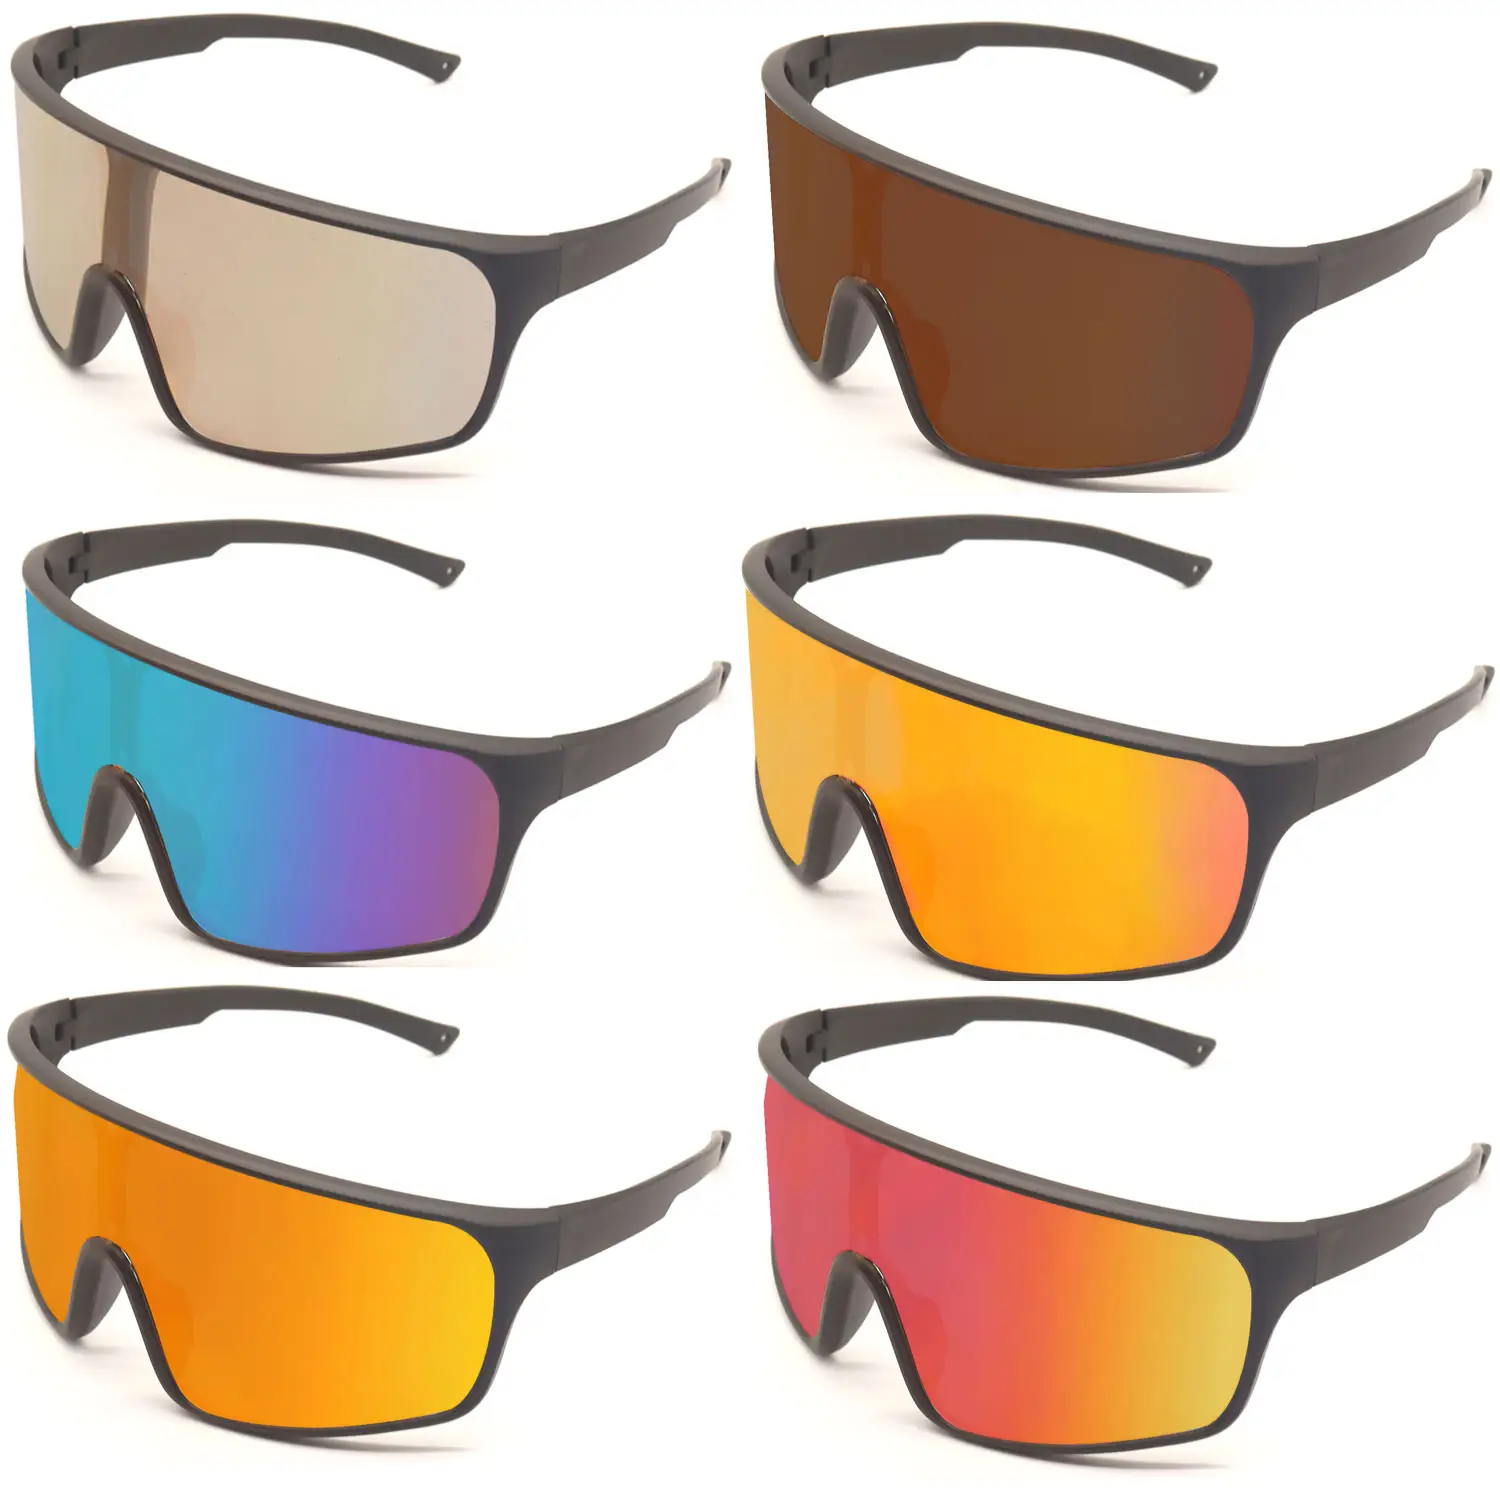 Kacamata sepeda olahraga, terpolarisasi luar ruangan ukuran besar 100% bersepeda perlindungan UV kacamata sepeda berkendara kacamata bersepeda photoromik